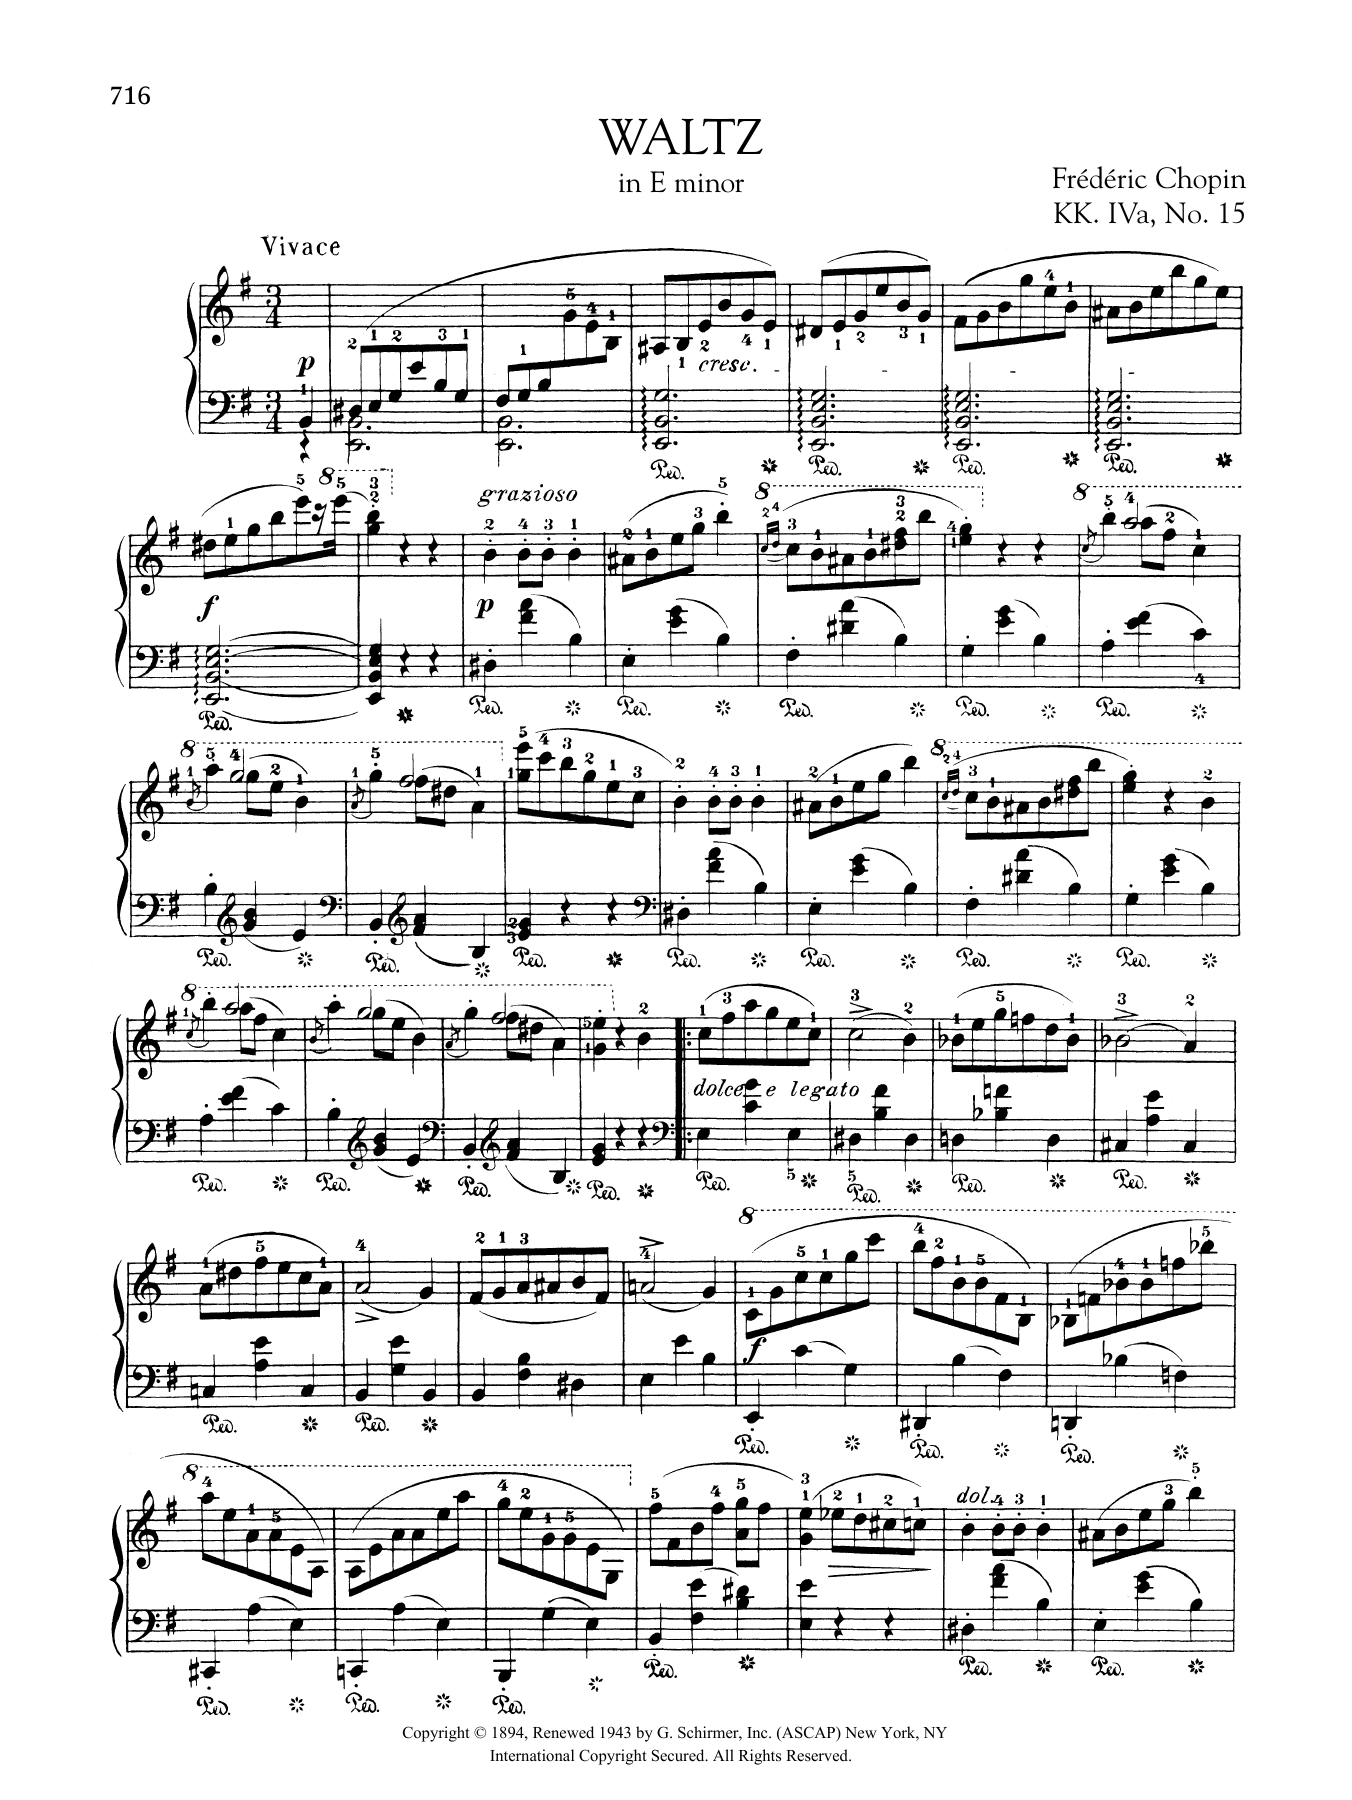 Download Frederic Chopin Waltz in E minor, KK. IVa, No. 15 Sheet Music